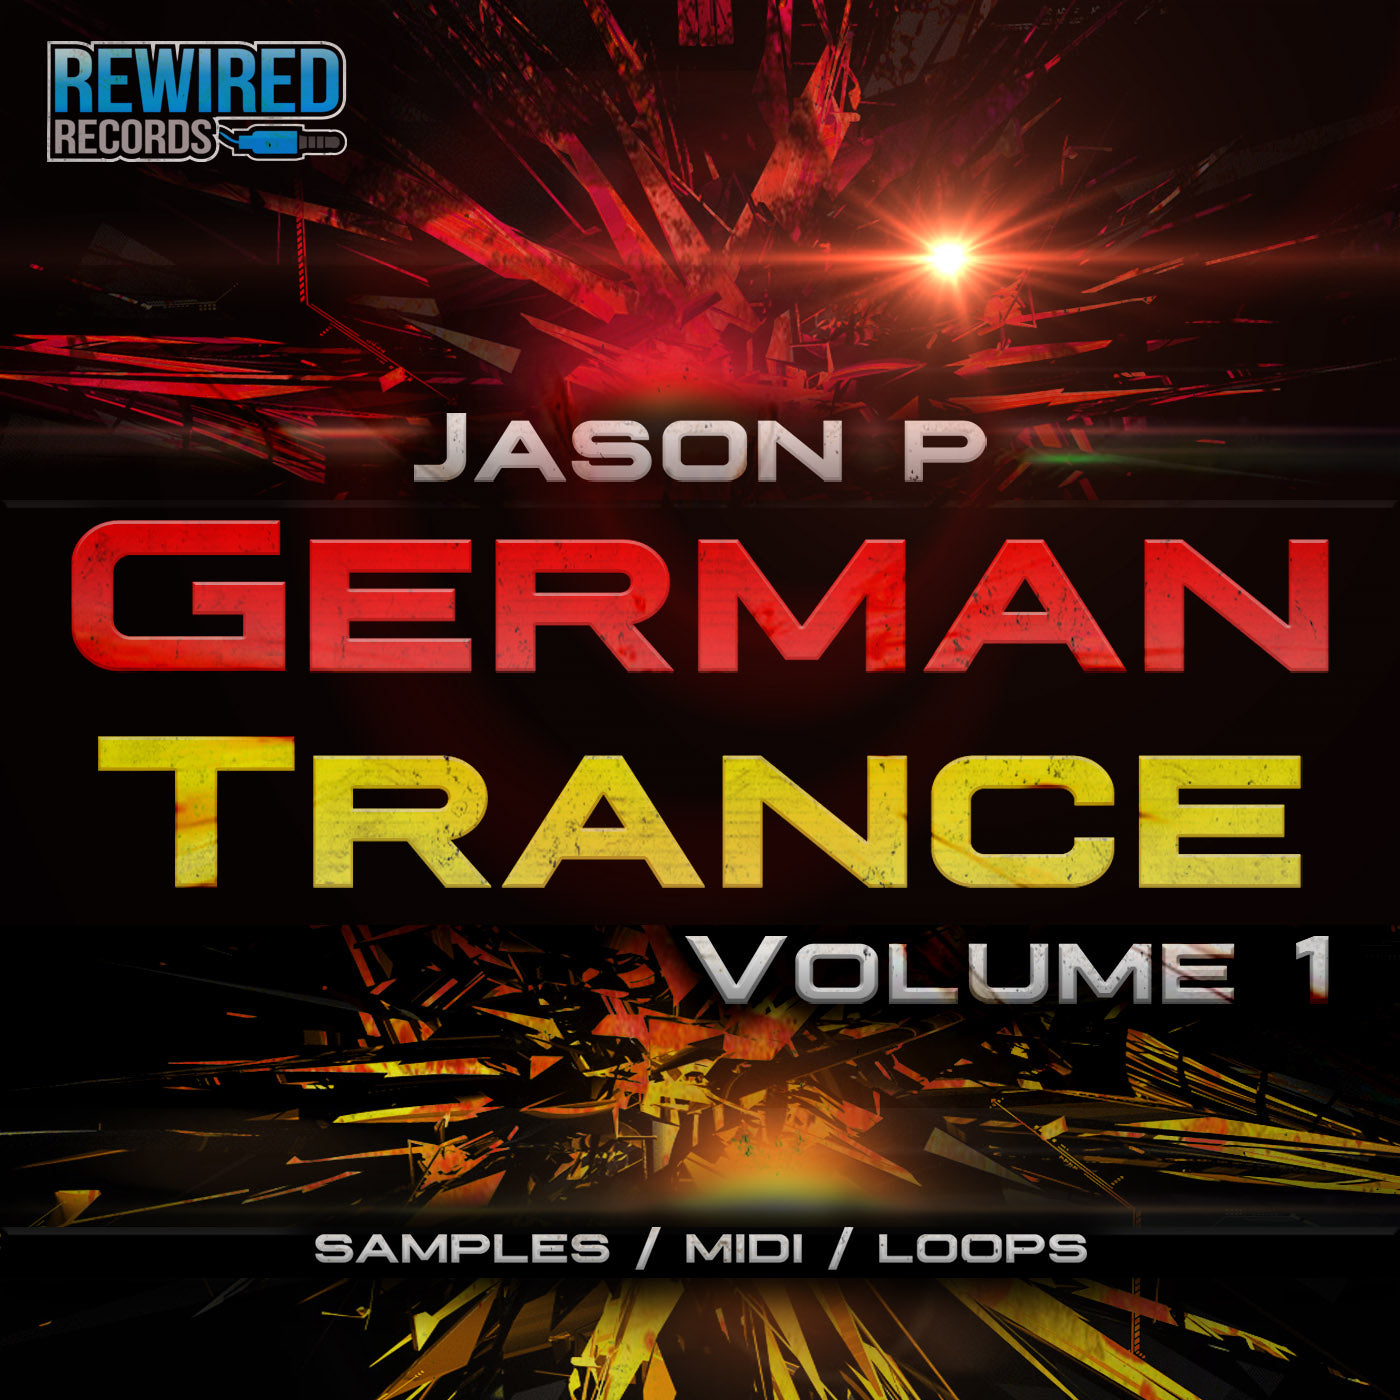 Jason P - German Trance Volume 1 (Producer Tools) - Rewired Records